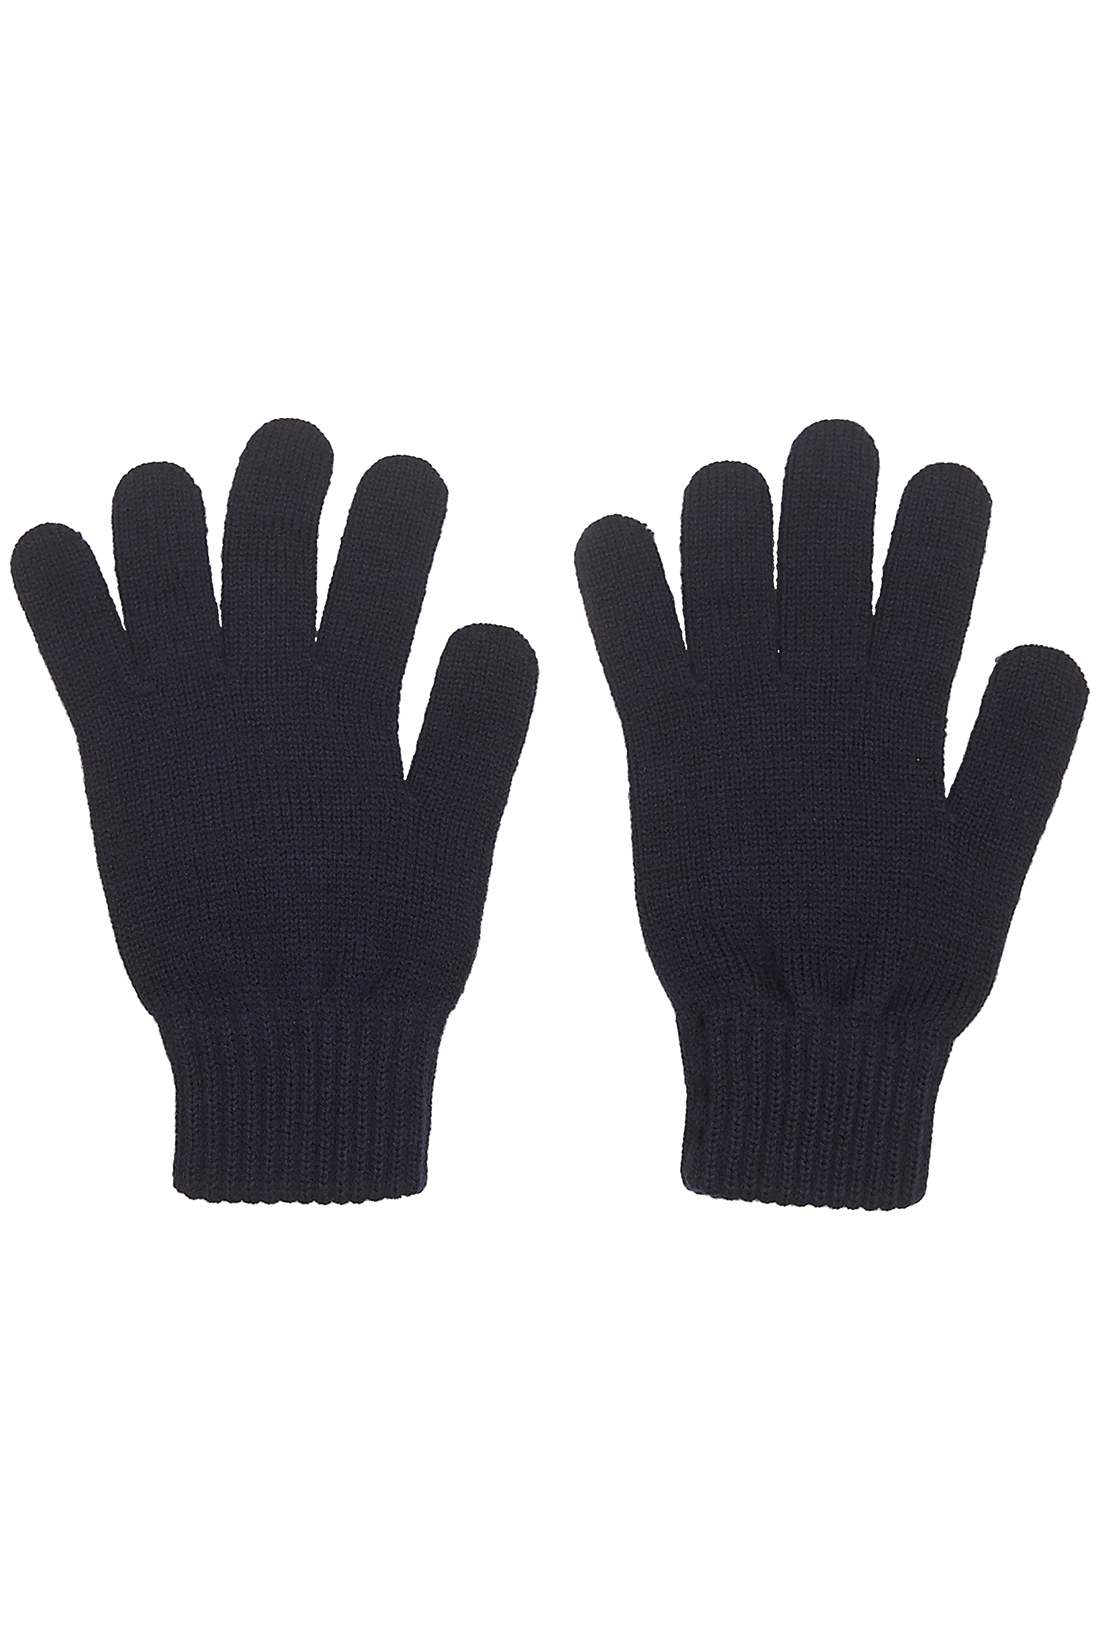 Полушерстяные перчатки (арт. baon B868504), размер Без/раз, цвет синий Полушерстяные перчатки (арт. baon B868504) - фото 2